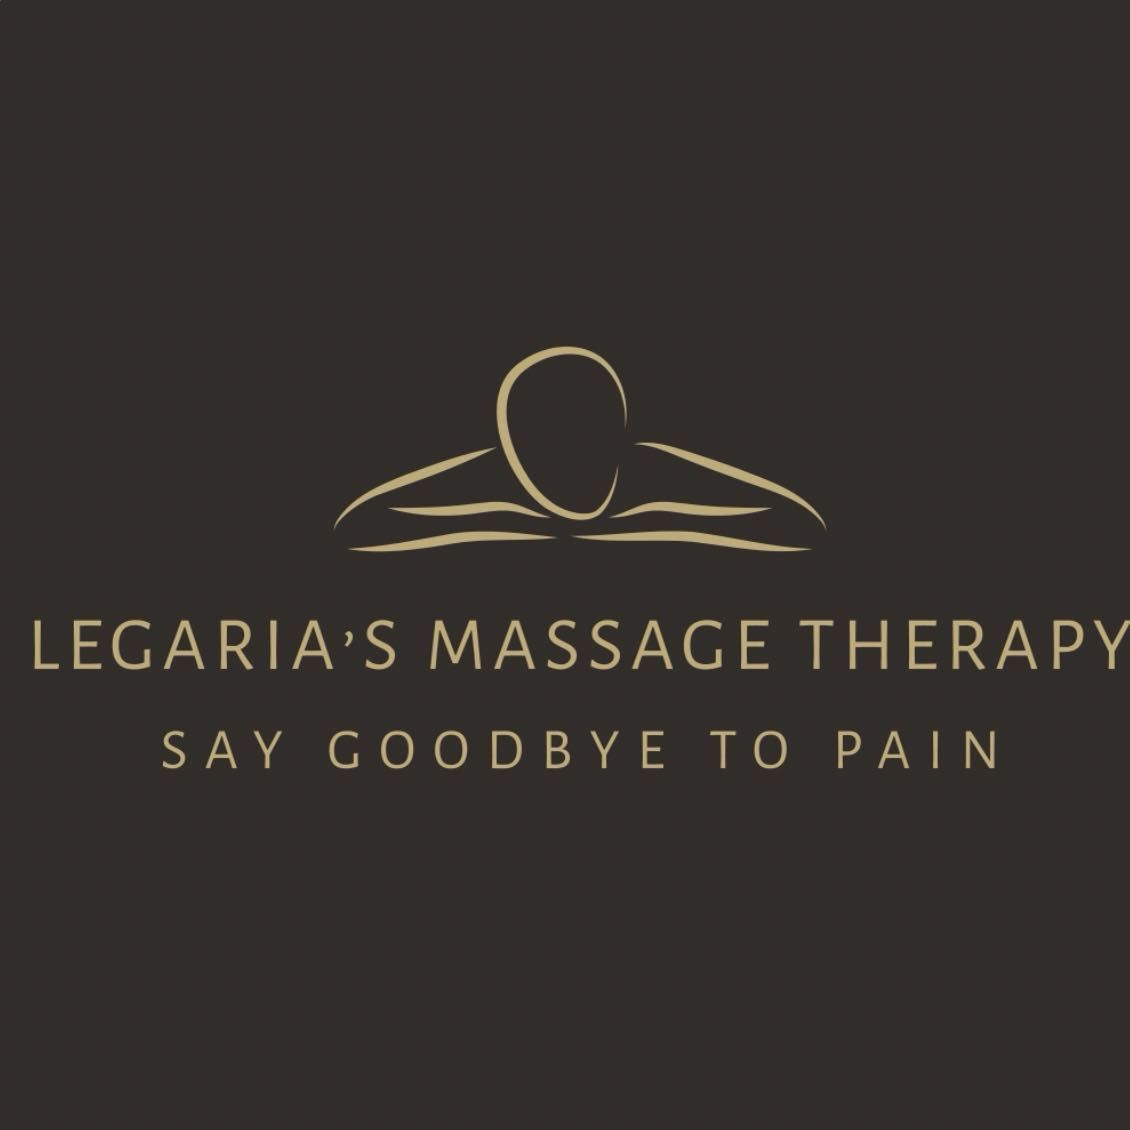 Legaria’s Massage Therapy, 2100 Travis St, Houston, 77002